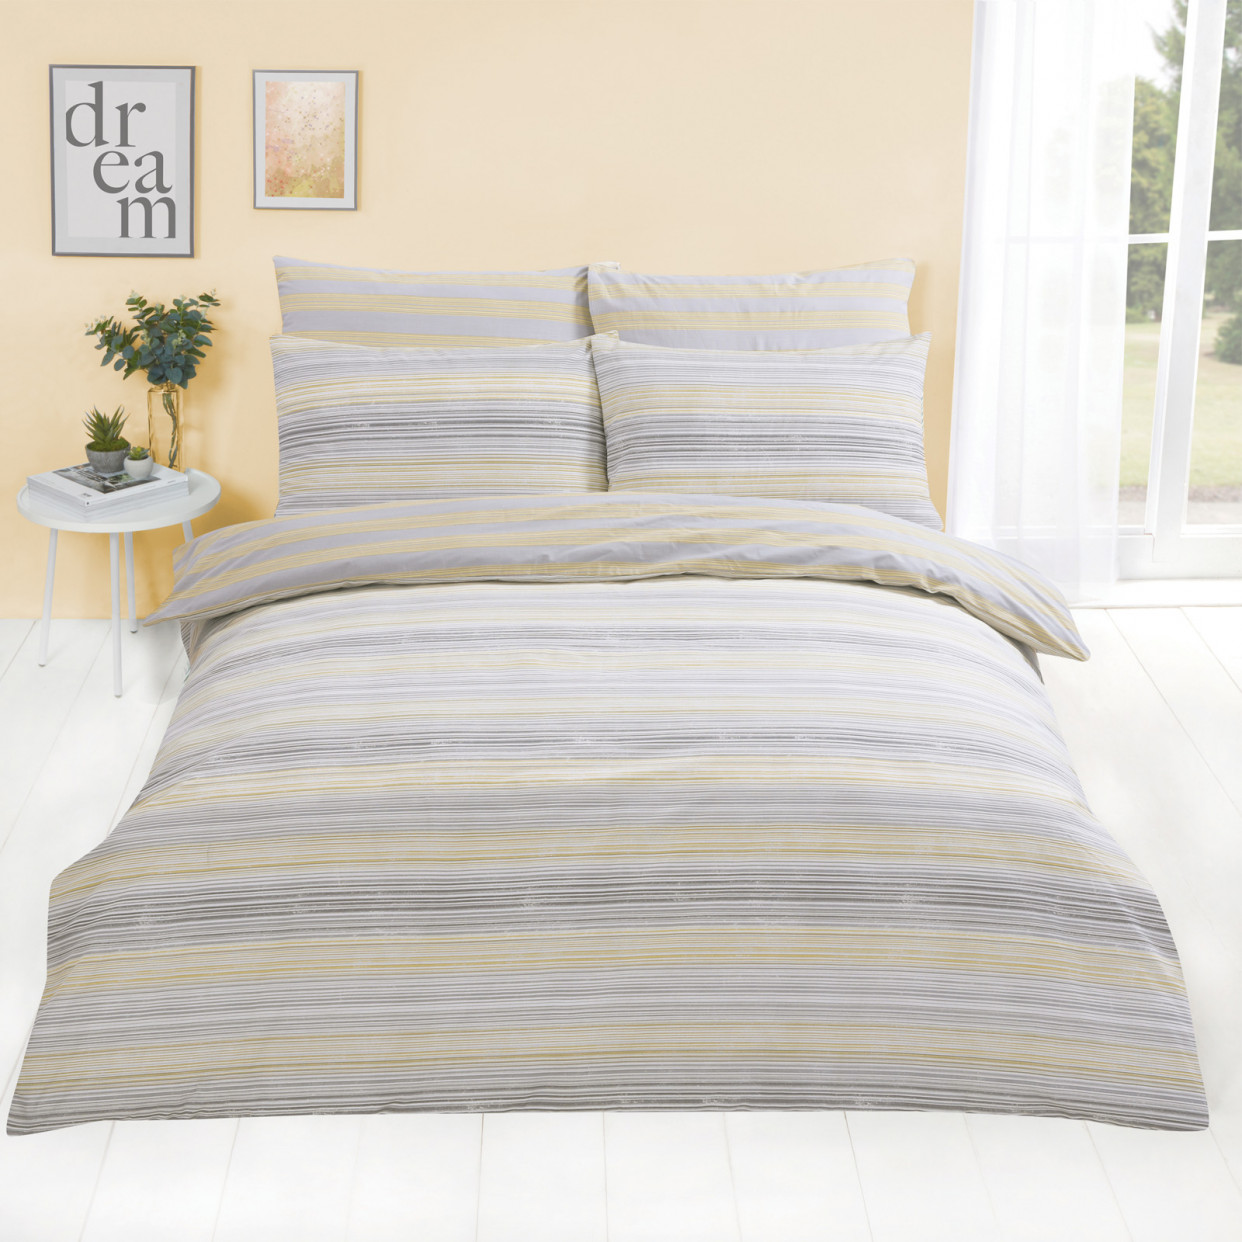 Dreamscene Speckle Stripe Duvet Cover with Pillowcase, Yellow - Double>